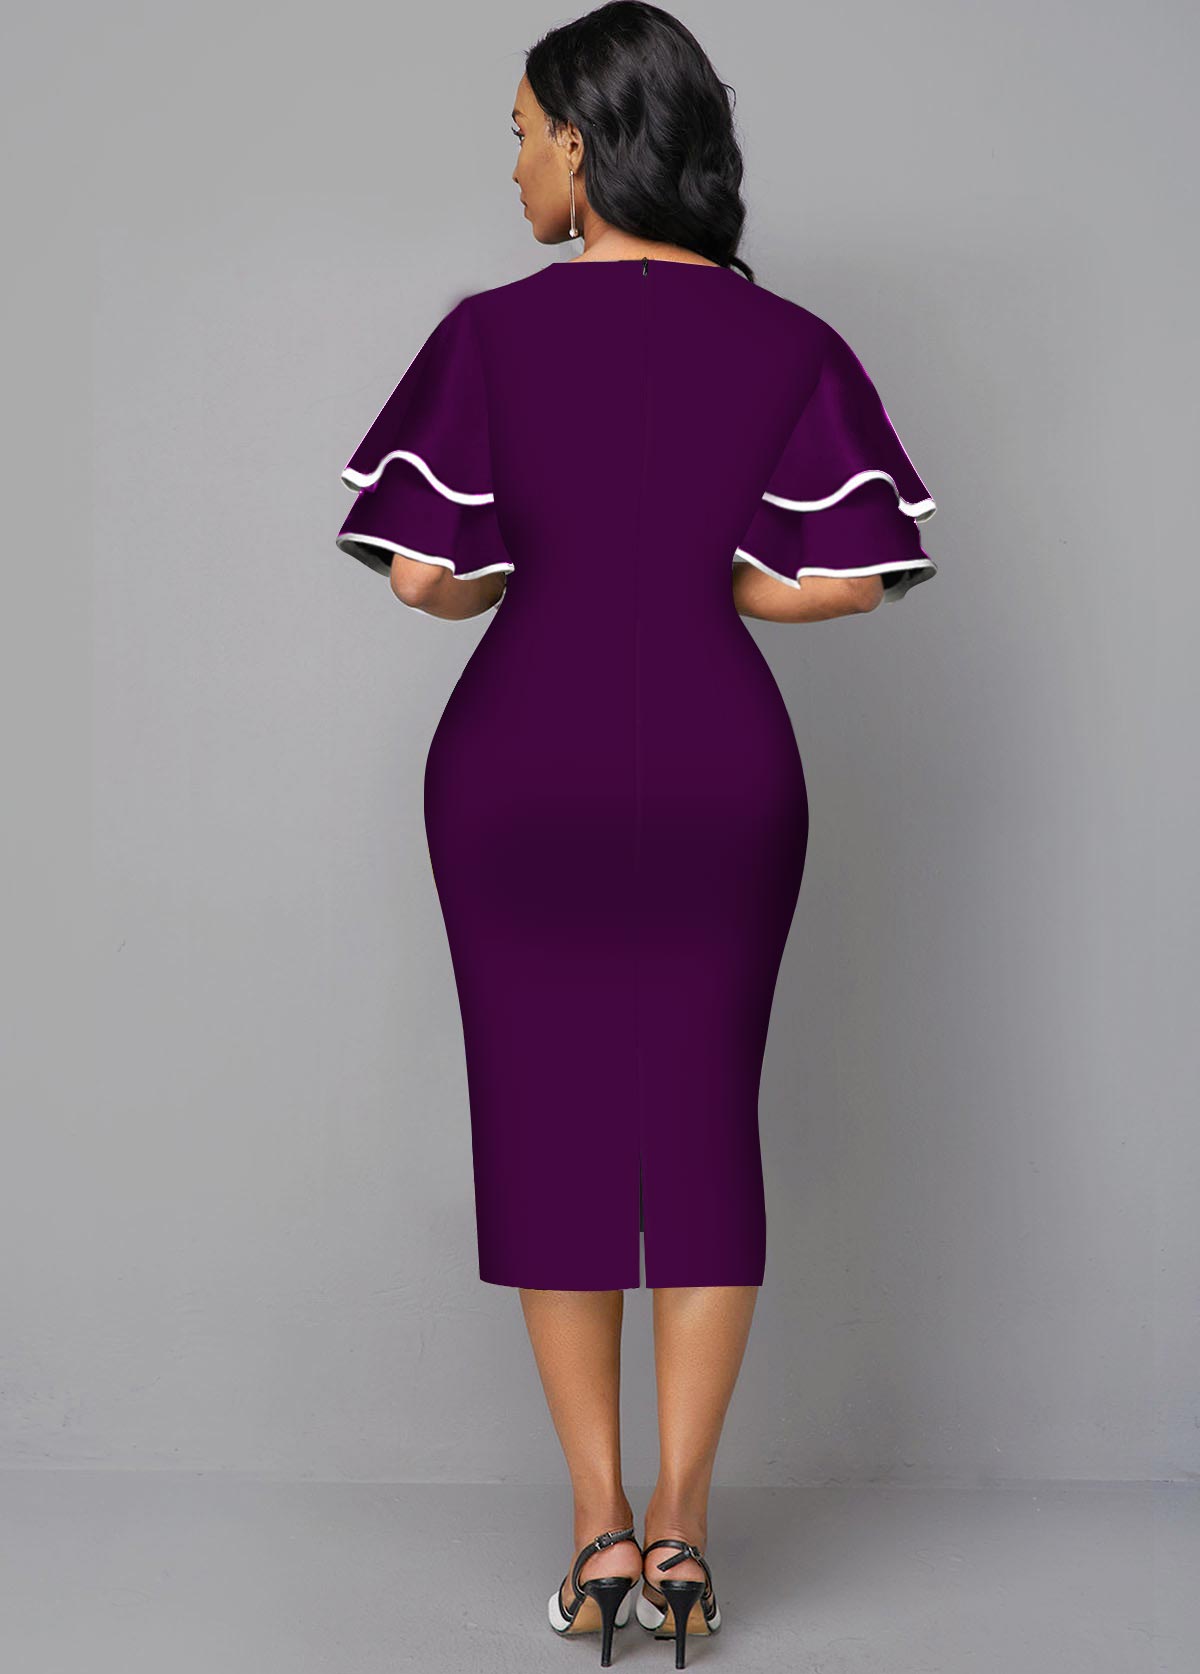 V Neck Geometric Print Layered Bell Sleeve Purple Dress